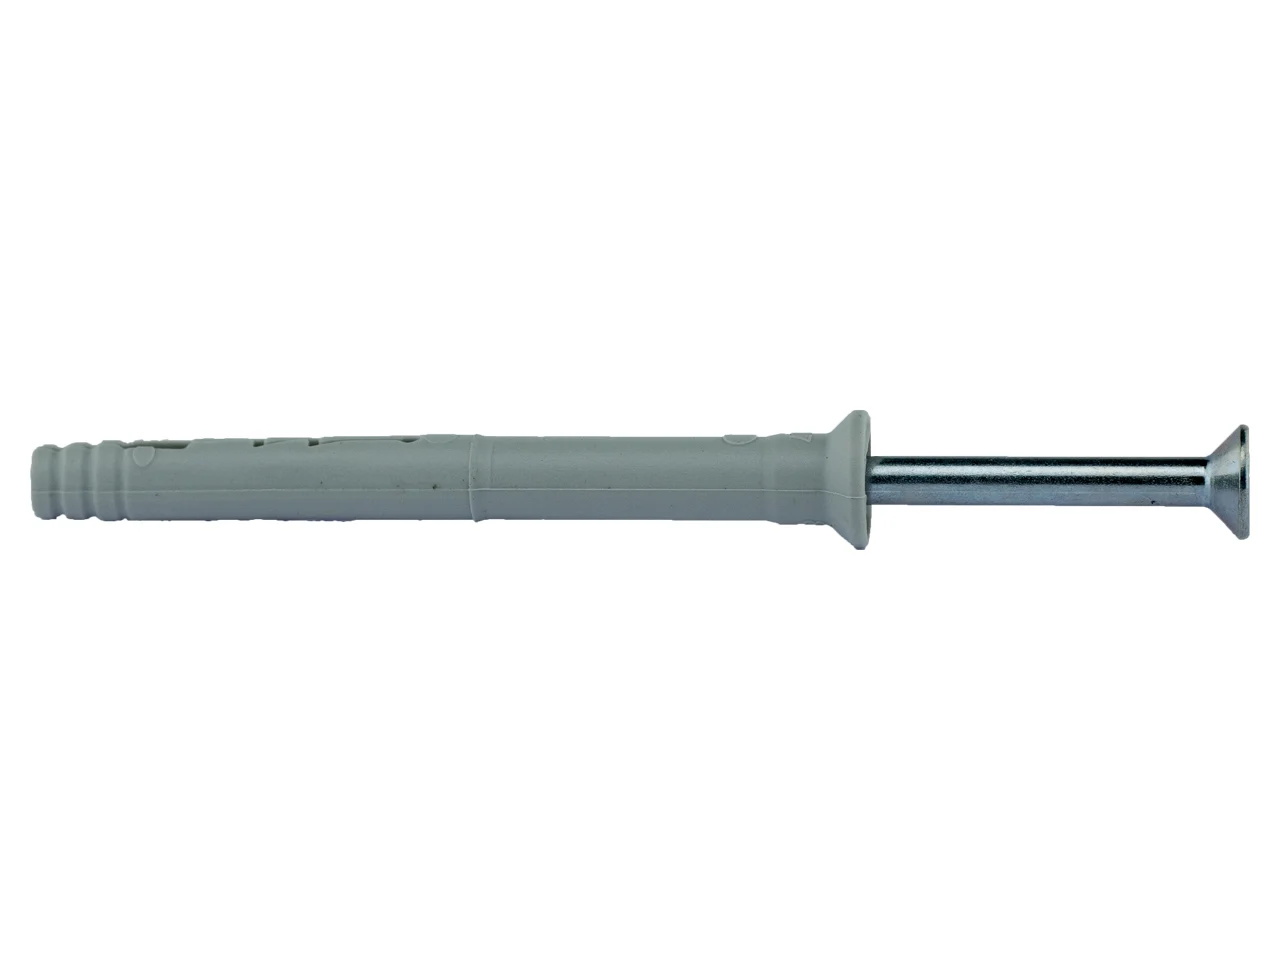 Silverline Titanium-Coated HSS and Masonry Drill Bit Set 19pce 1 - 9mm -  633805